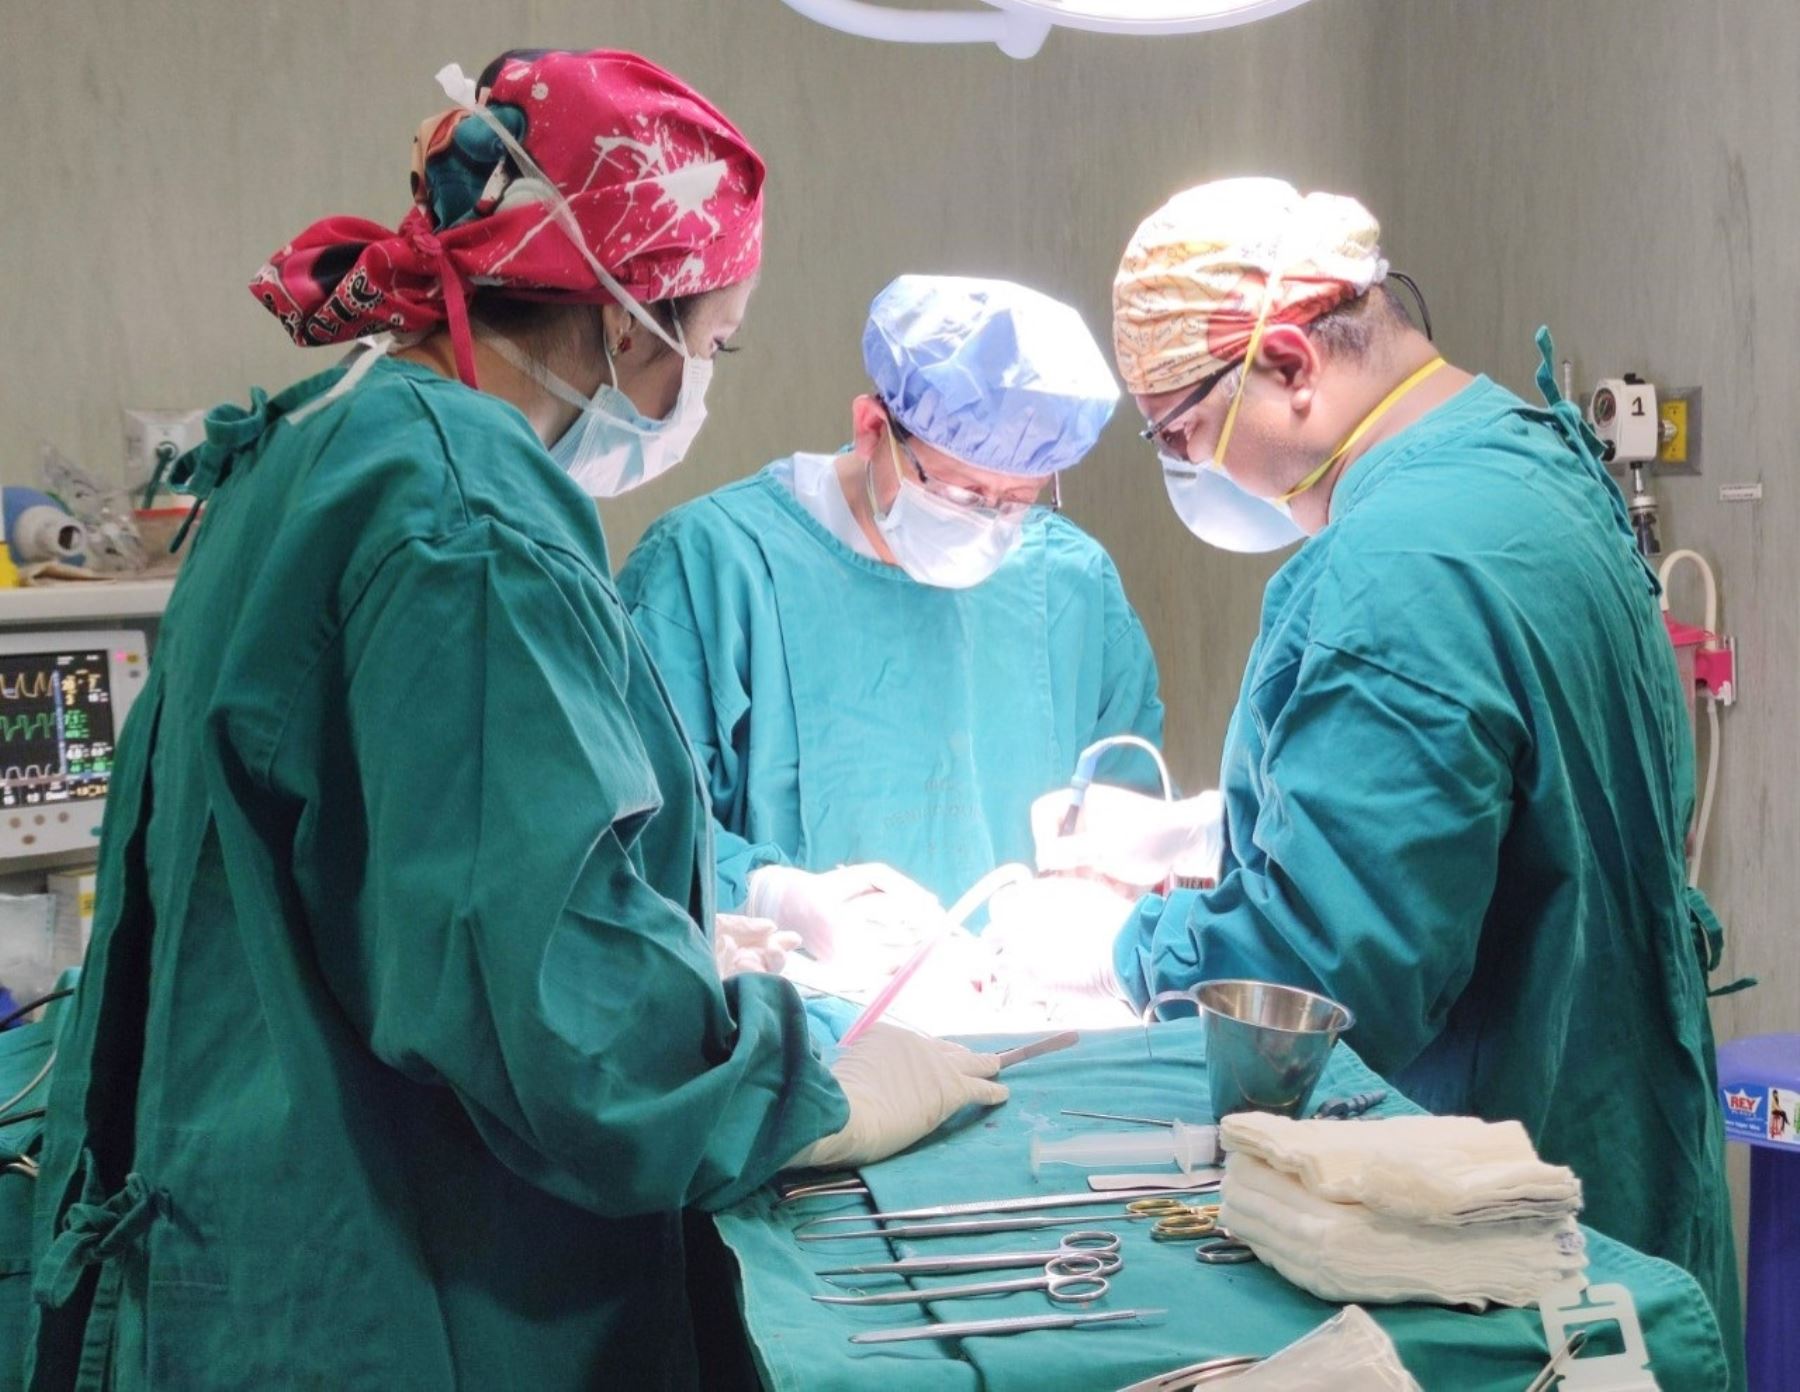 Neurocirujanos del Hospital Regional de Lambayeque, ubicado en Chiclayo, lograron extirpan un tumor cerebral gracias a un novedoso equipo. Foto: ANDINA/Difusión.